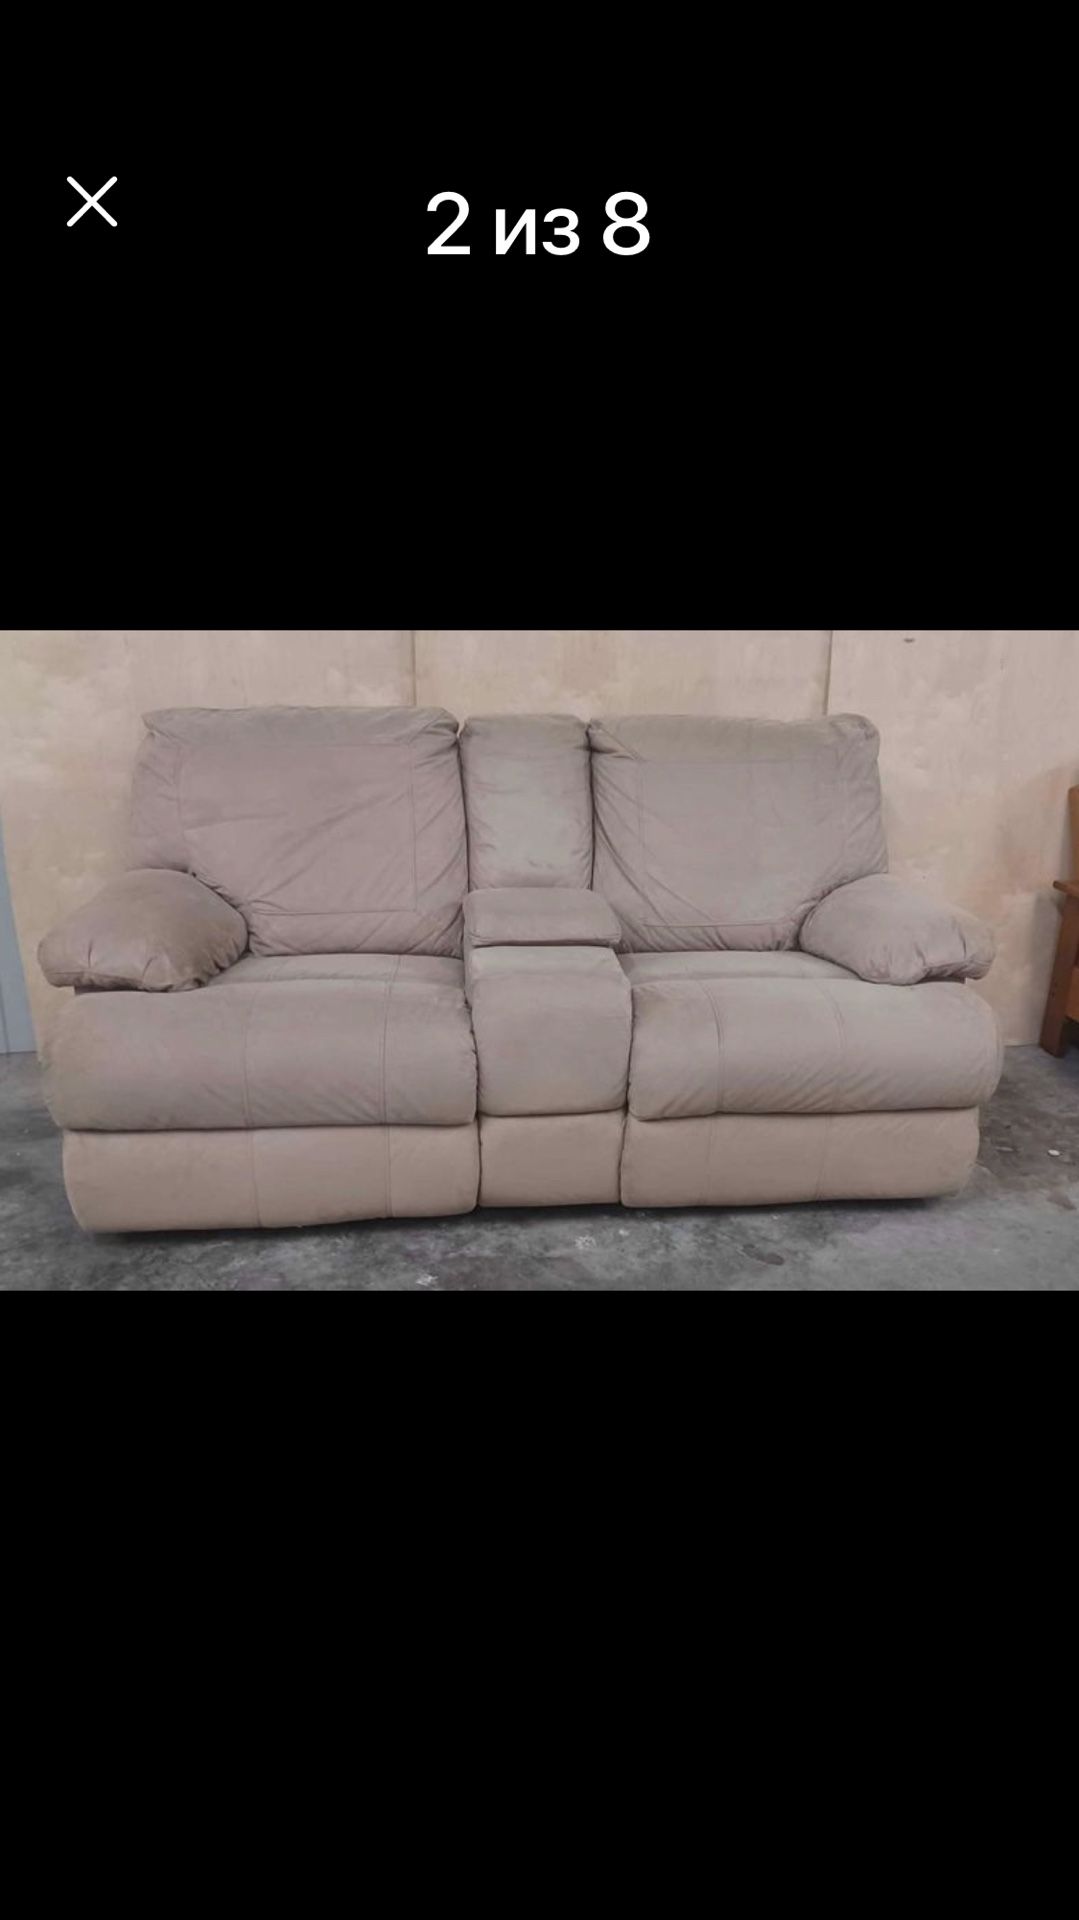 $250 suede sofa 78/38